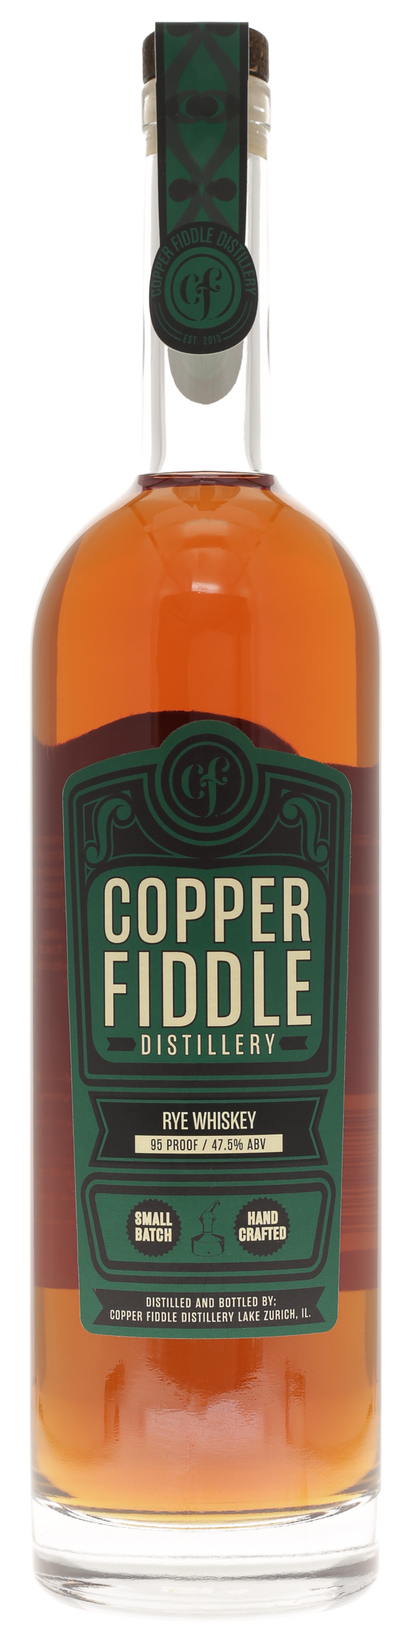 Copper Fiddle Rye Whiskey